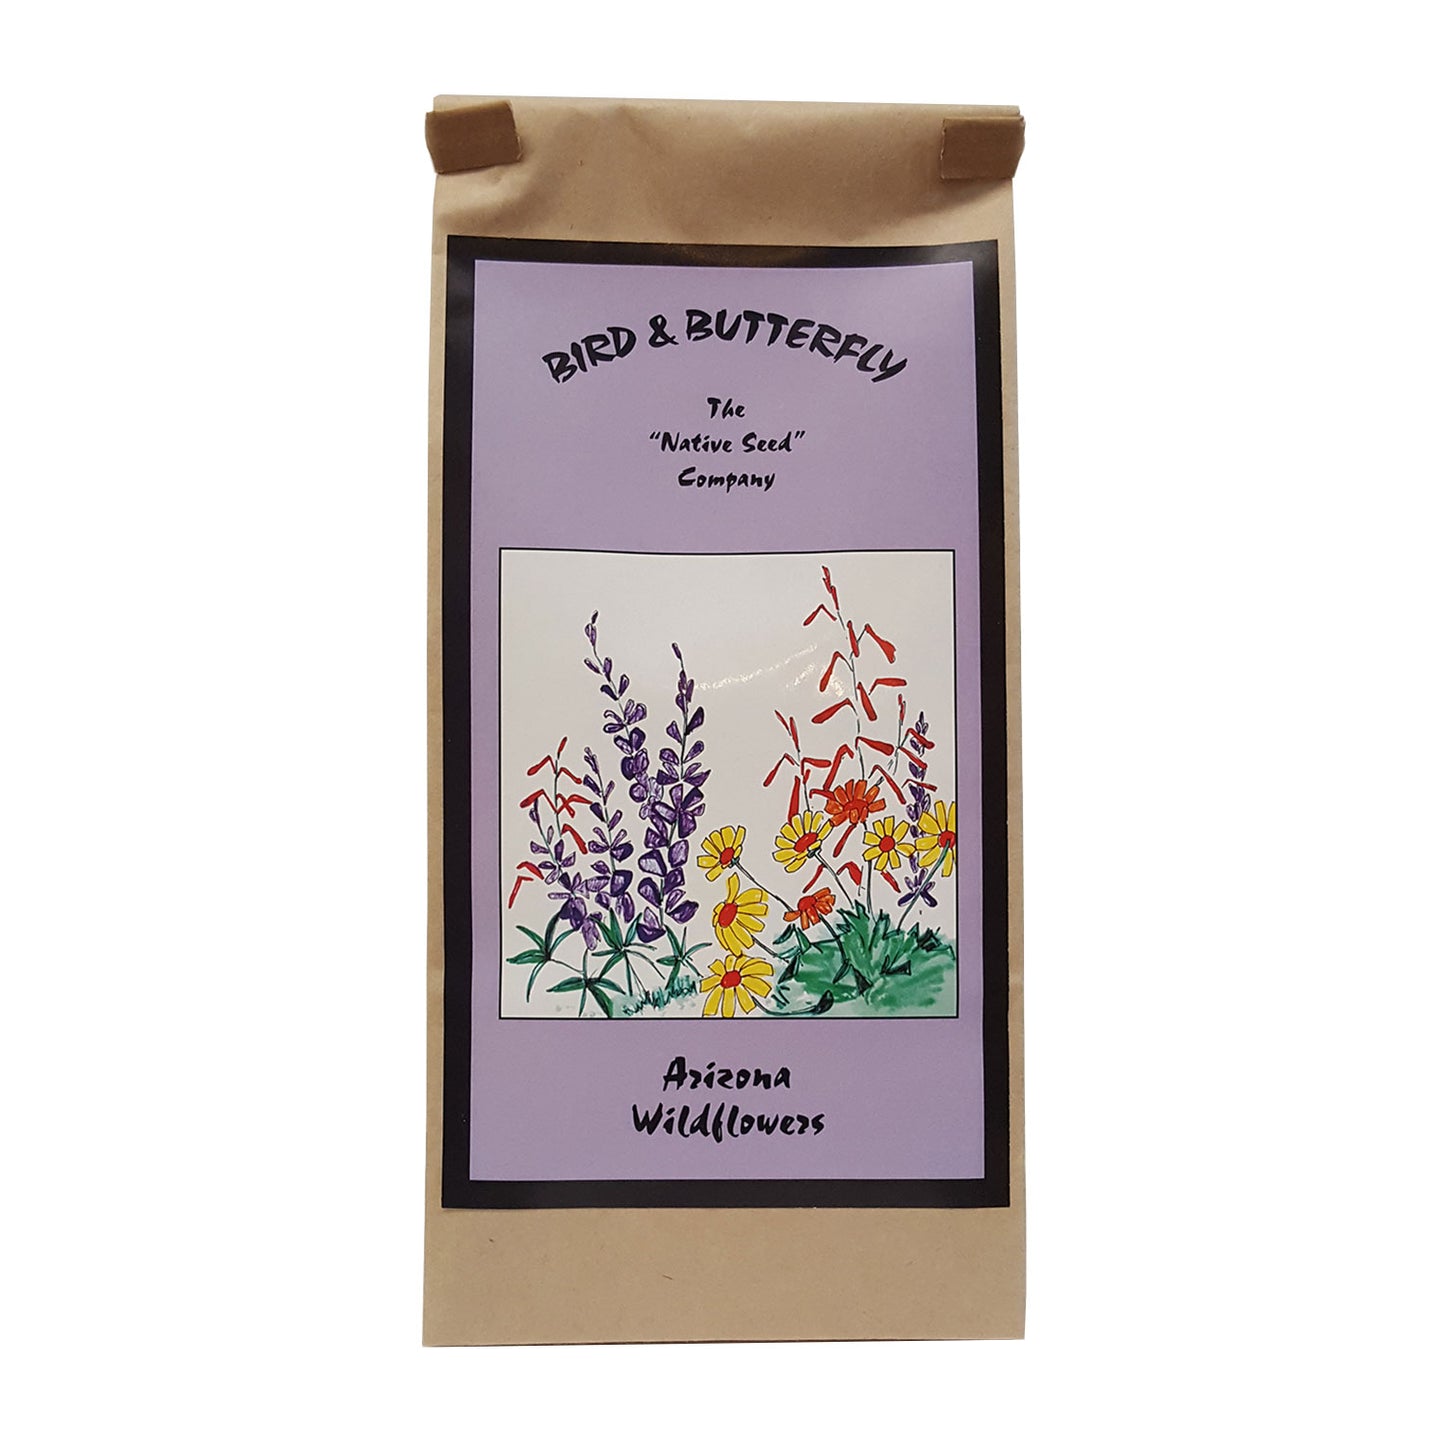 wildflower seeds for birds and butterflies